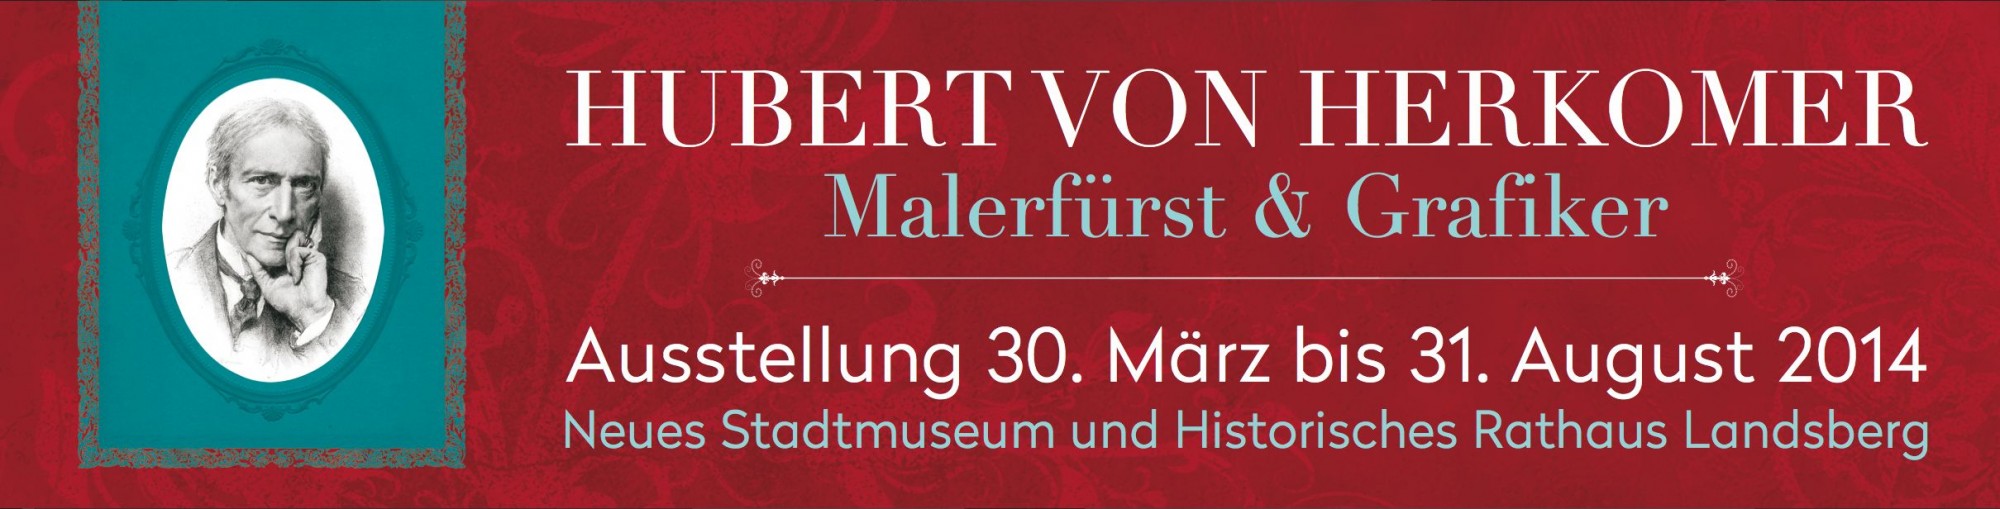 Porträt Hubert von Herkomers neben Schriftzug der Ausstellung